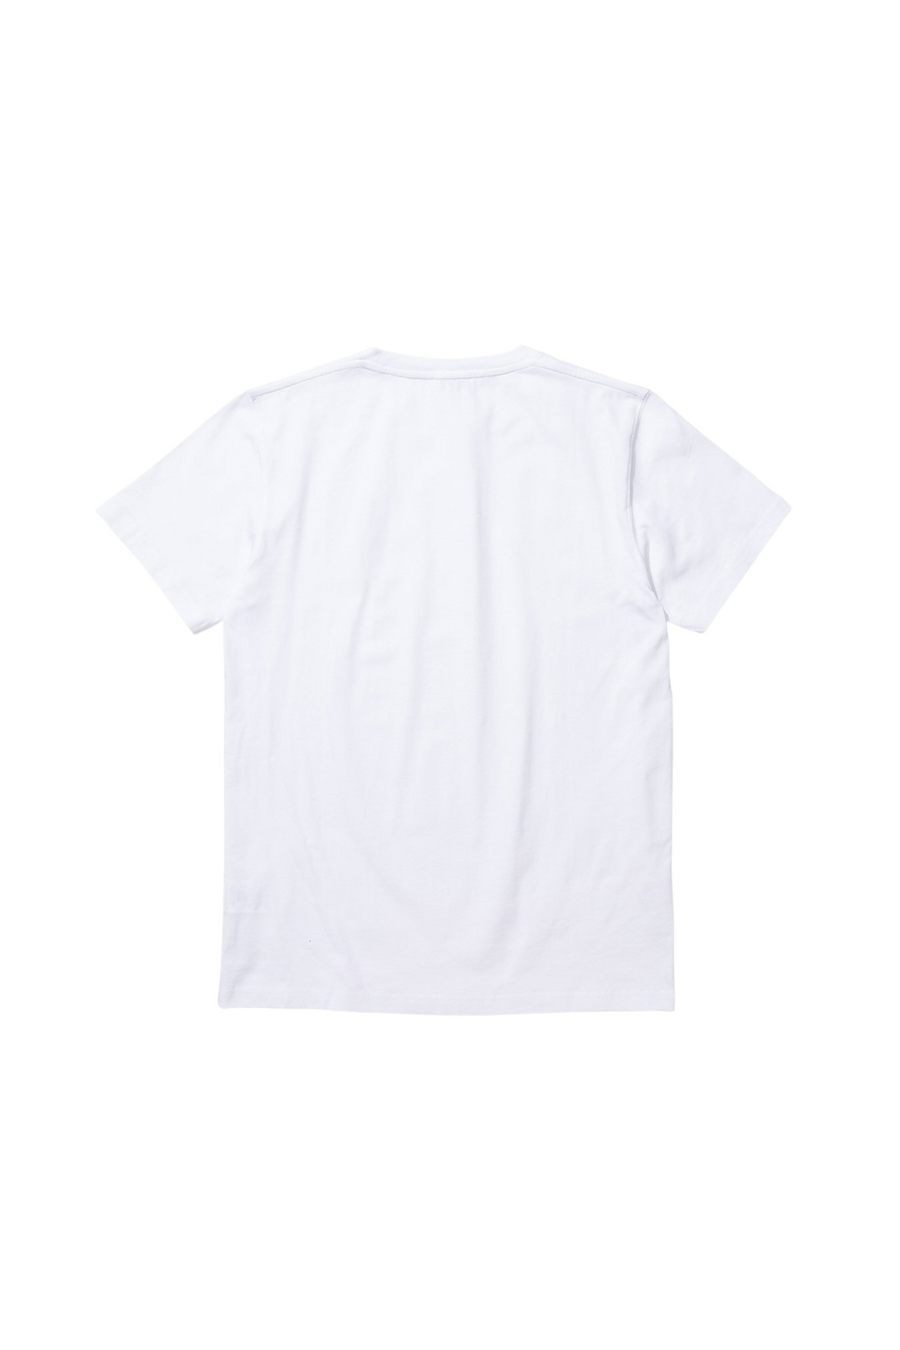 Niels Norse x Yu Nagaba T-shirt White